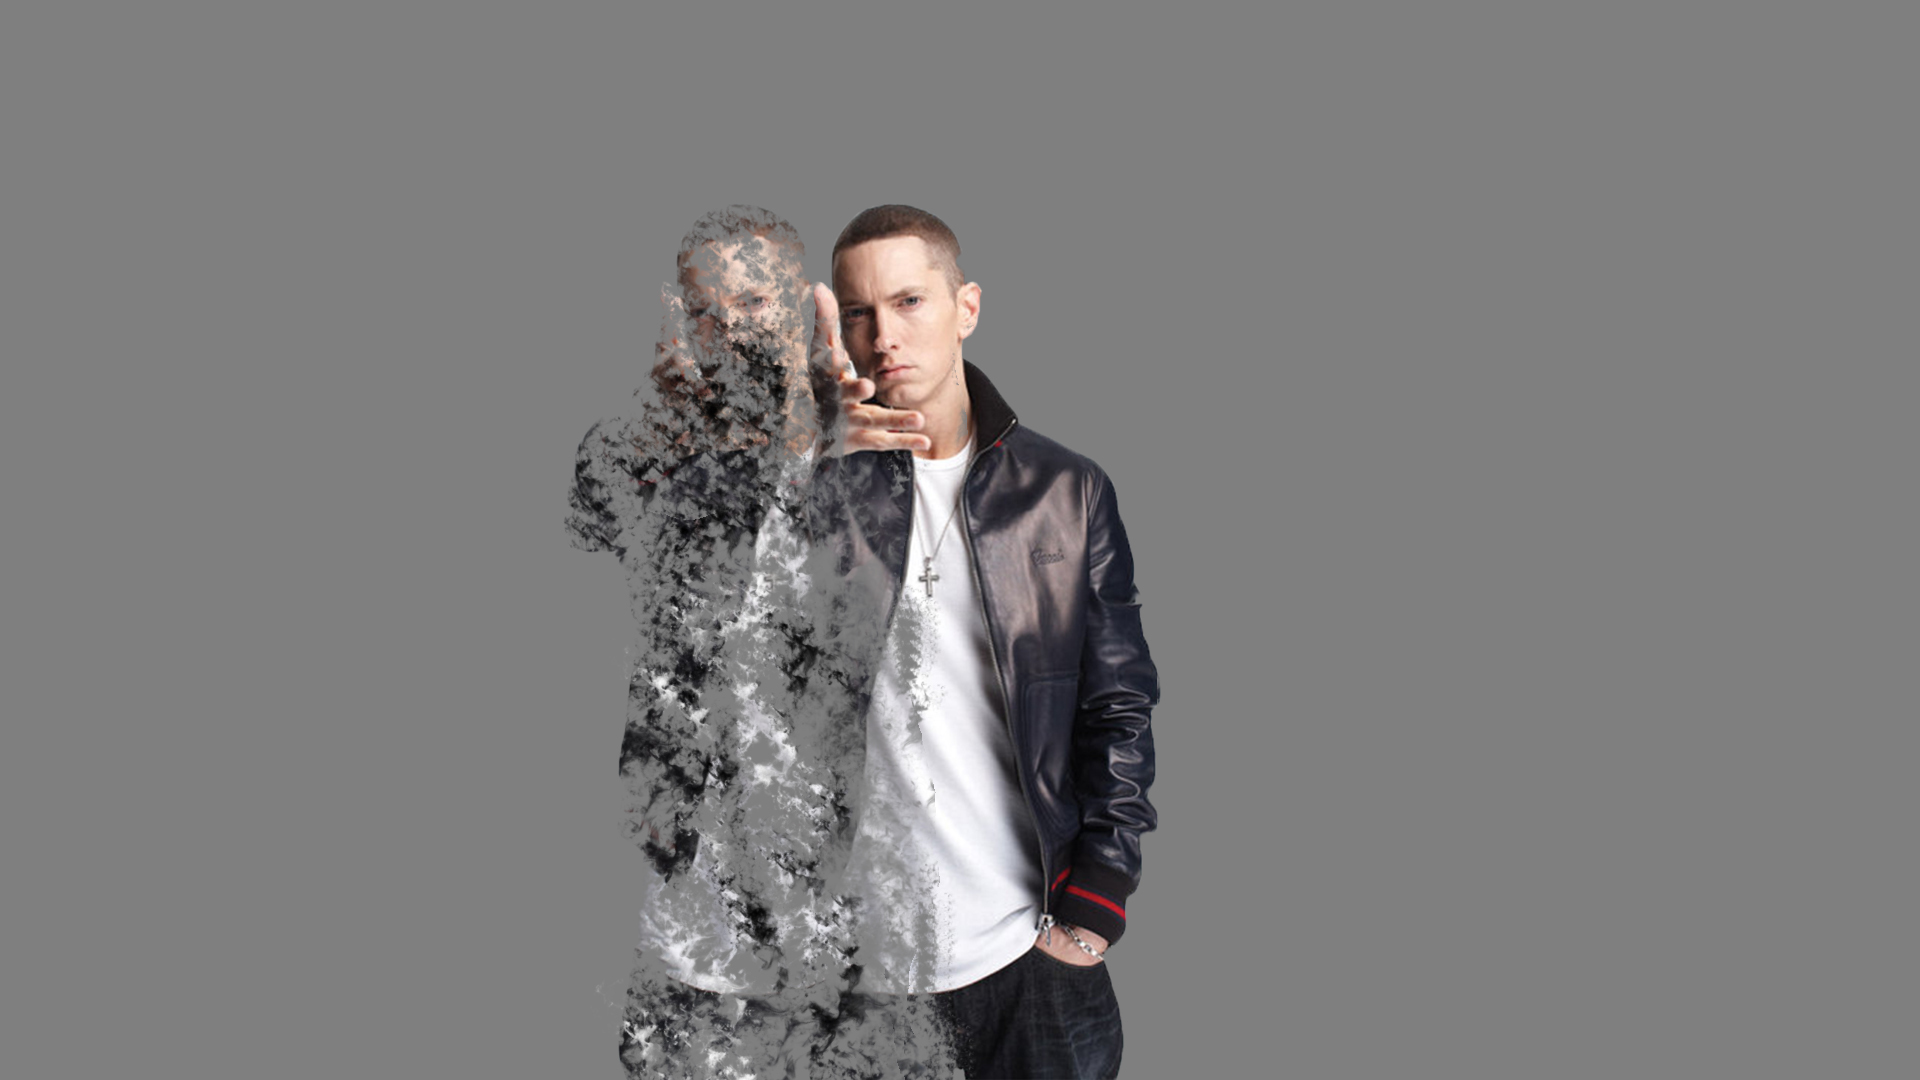 Eminem Wallpaper Image Photos Pictures Background